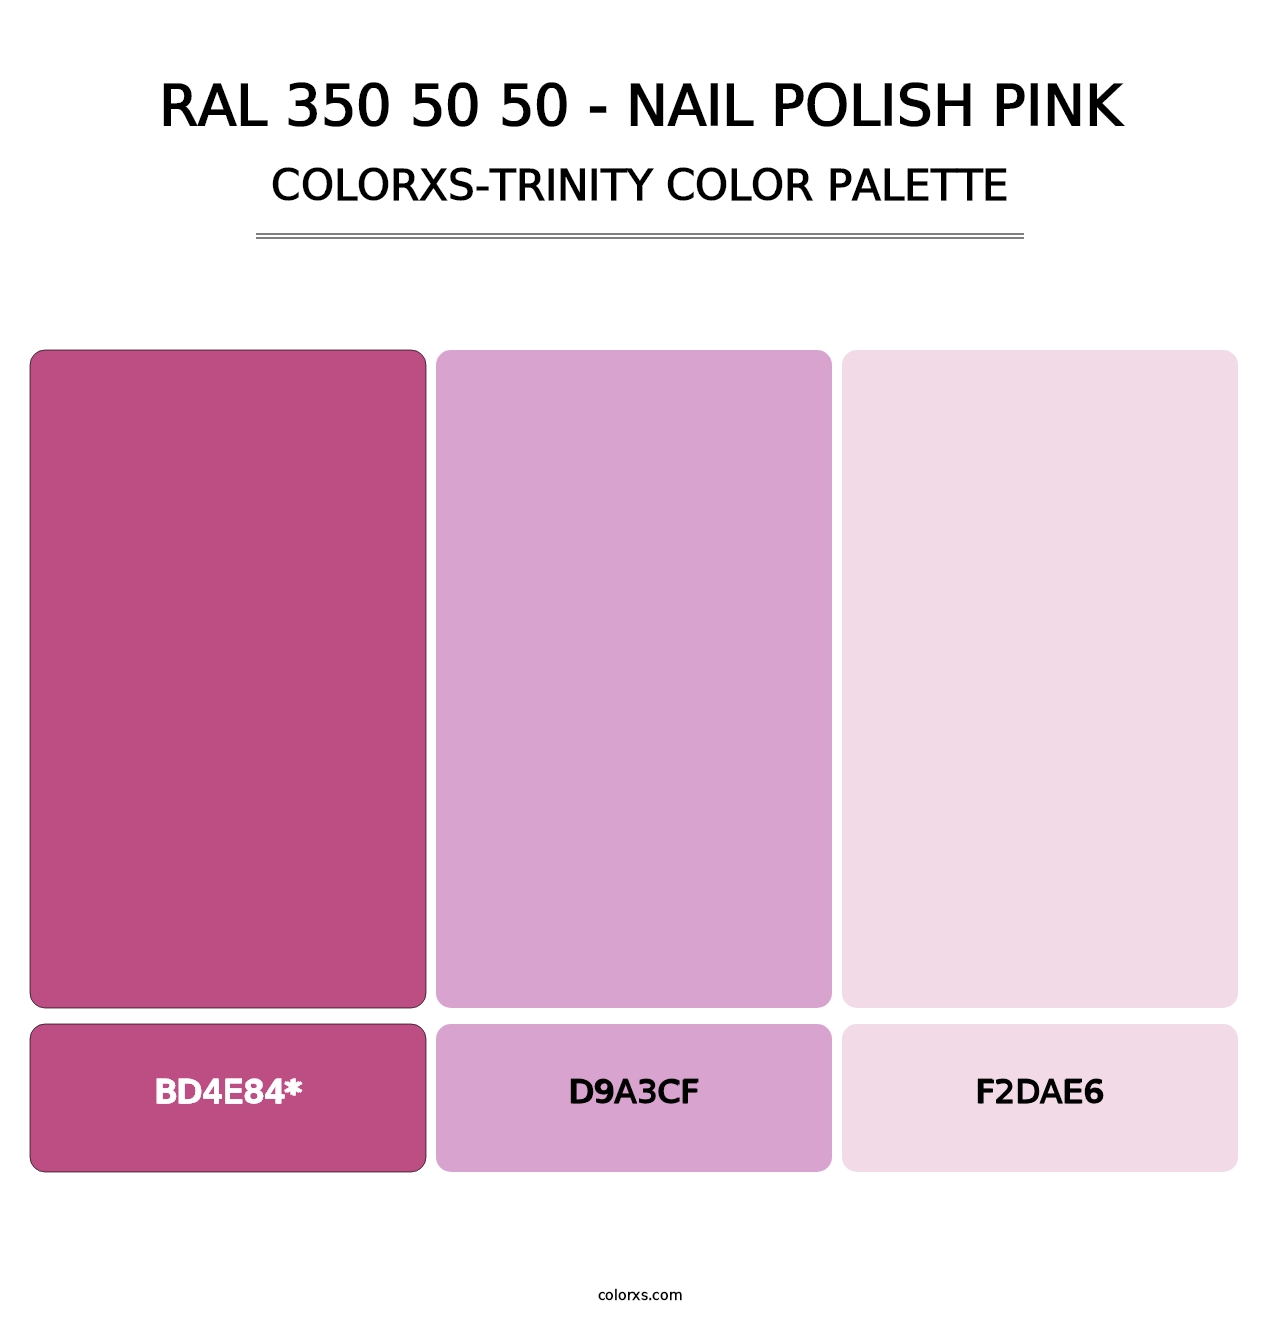 RAL 350 50 50 - Nail Polish Pink - Colorxs Trinity Palette